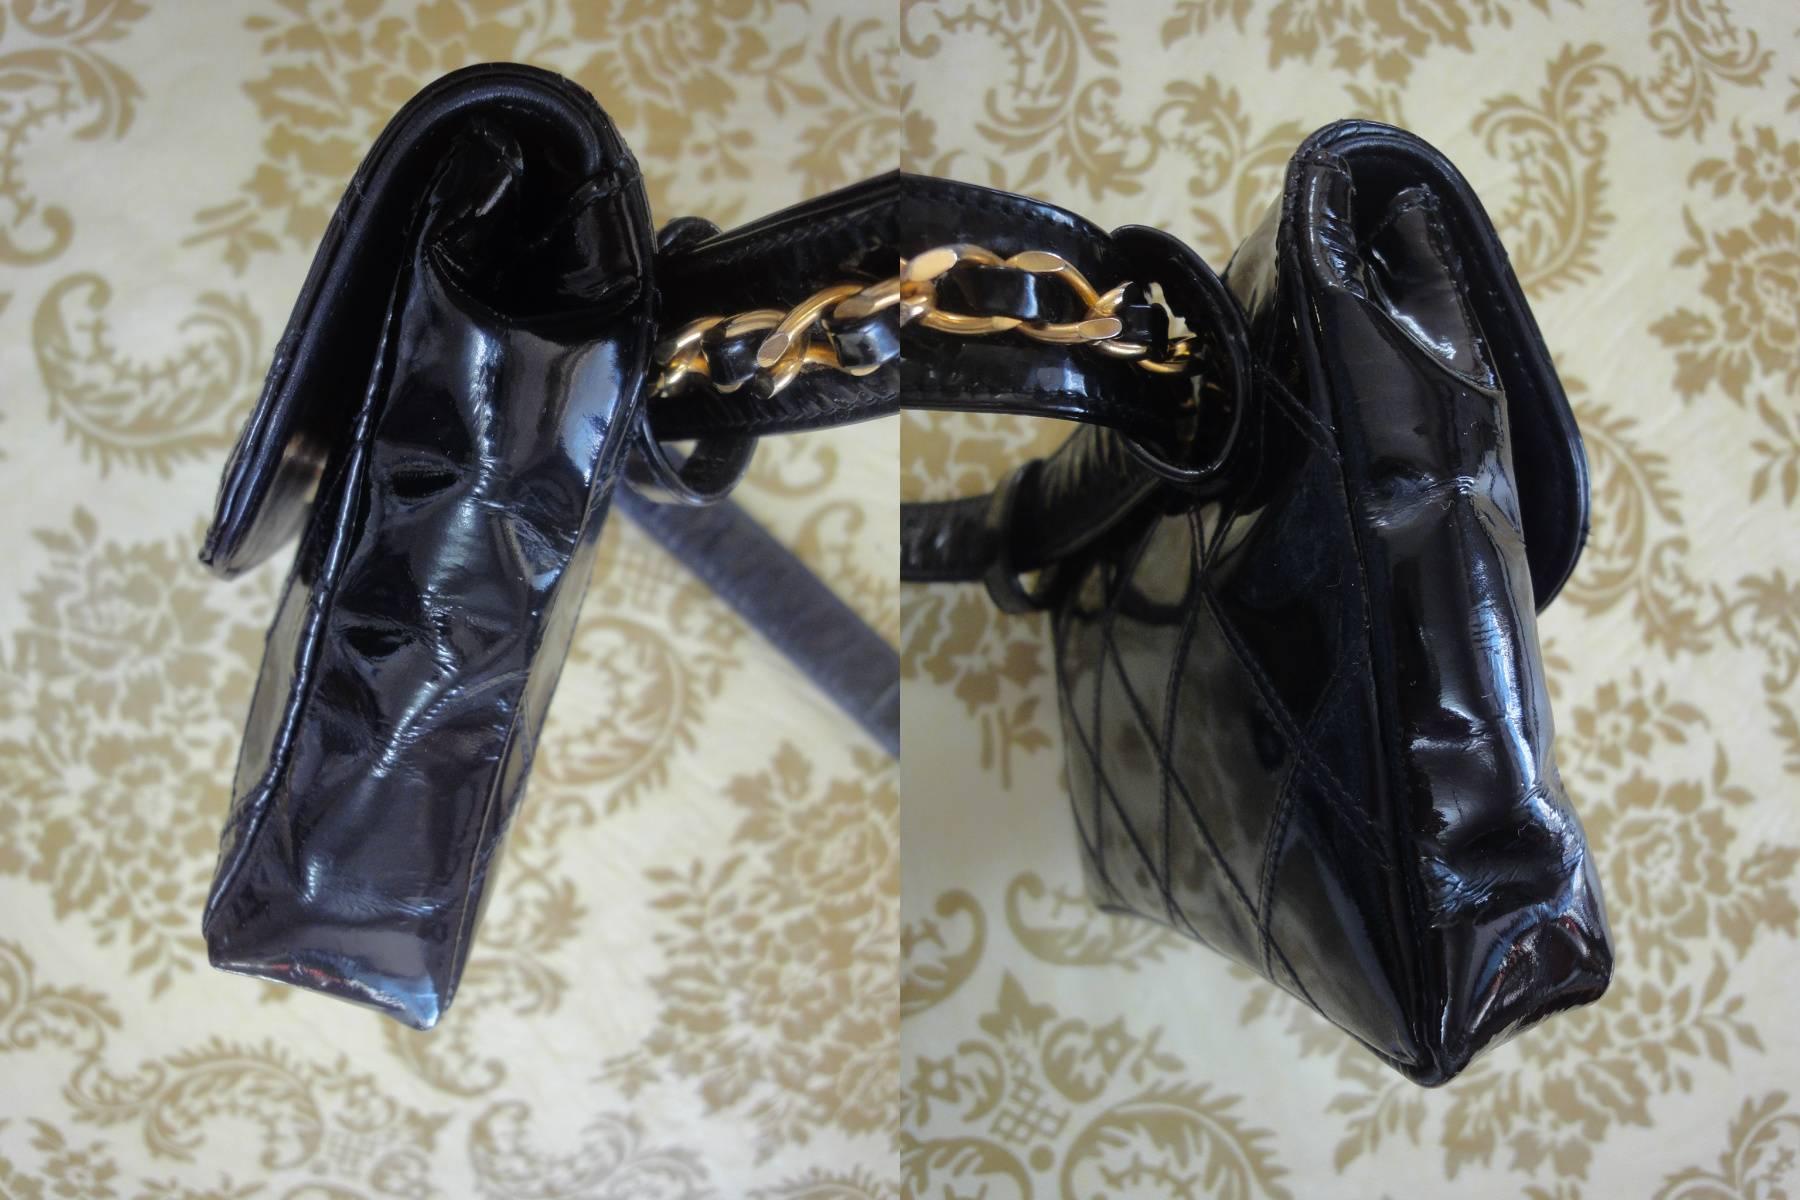 Vintage CHANEL black patent enamel waist purse, fanny pack with gold chain belt. 1